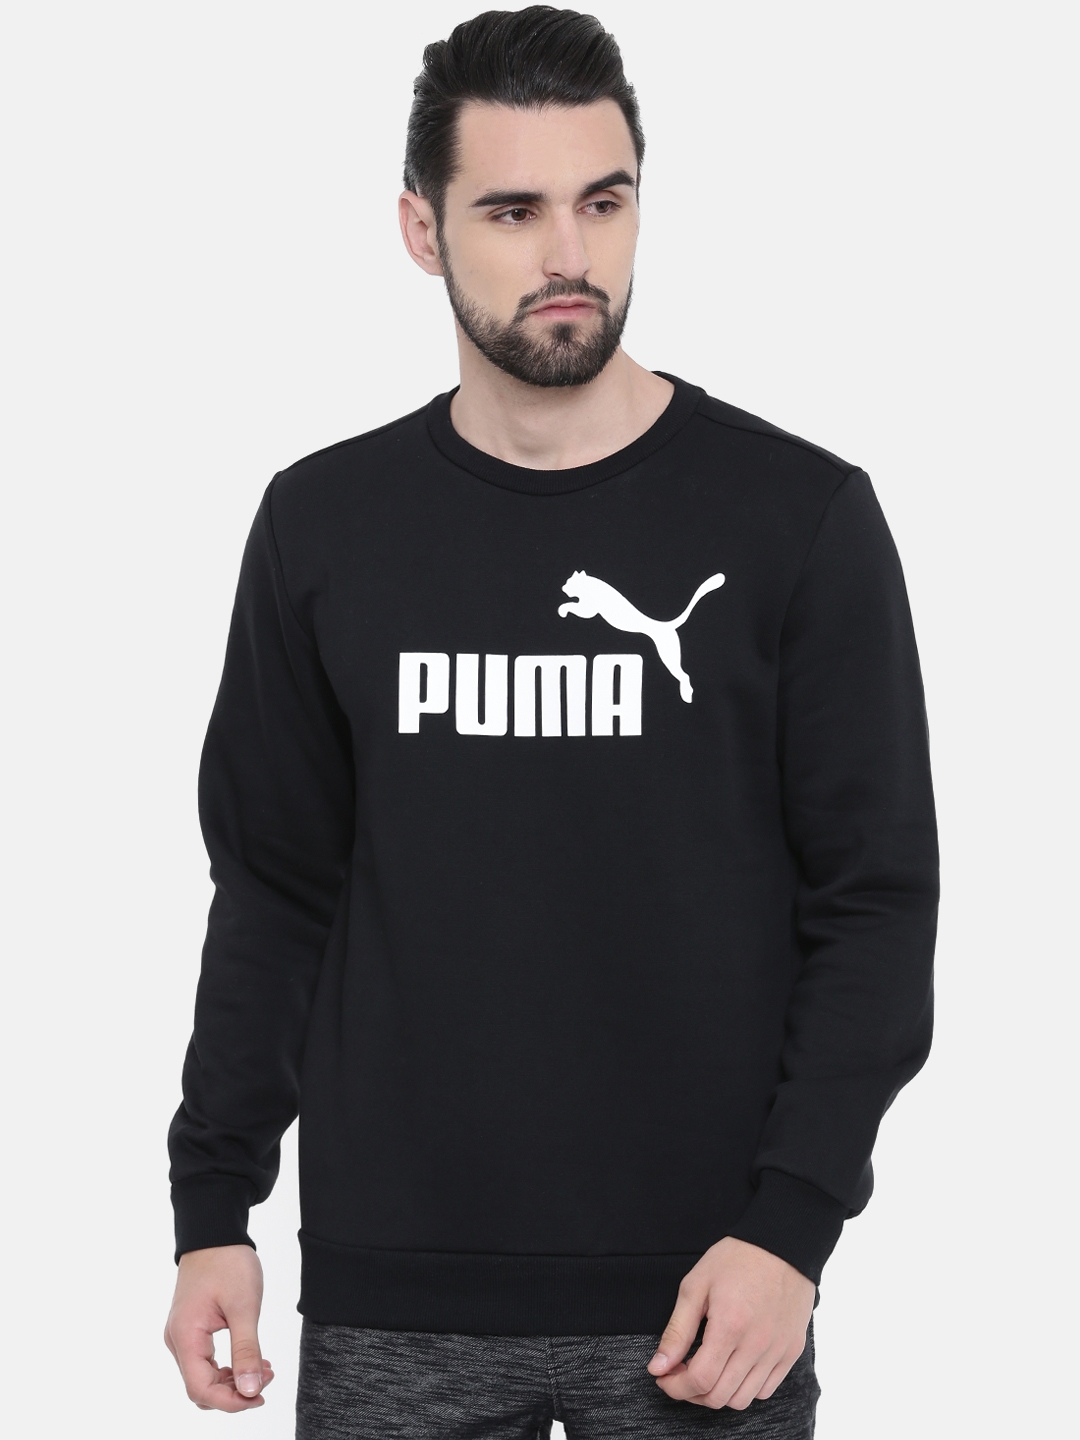 puma sweater mens black